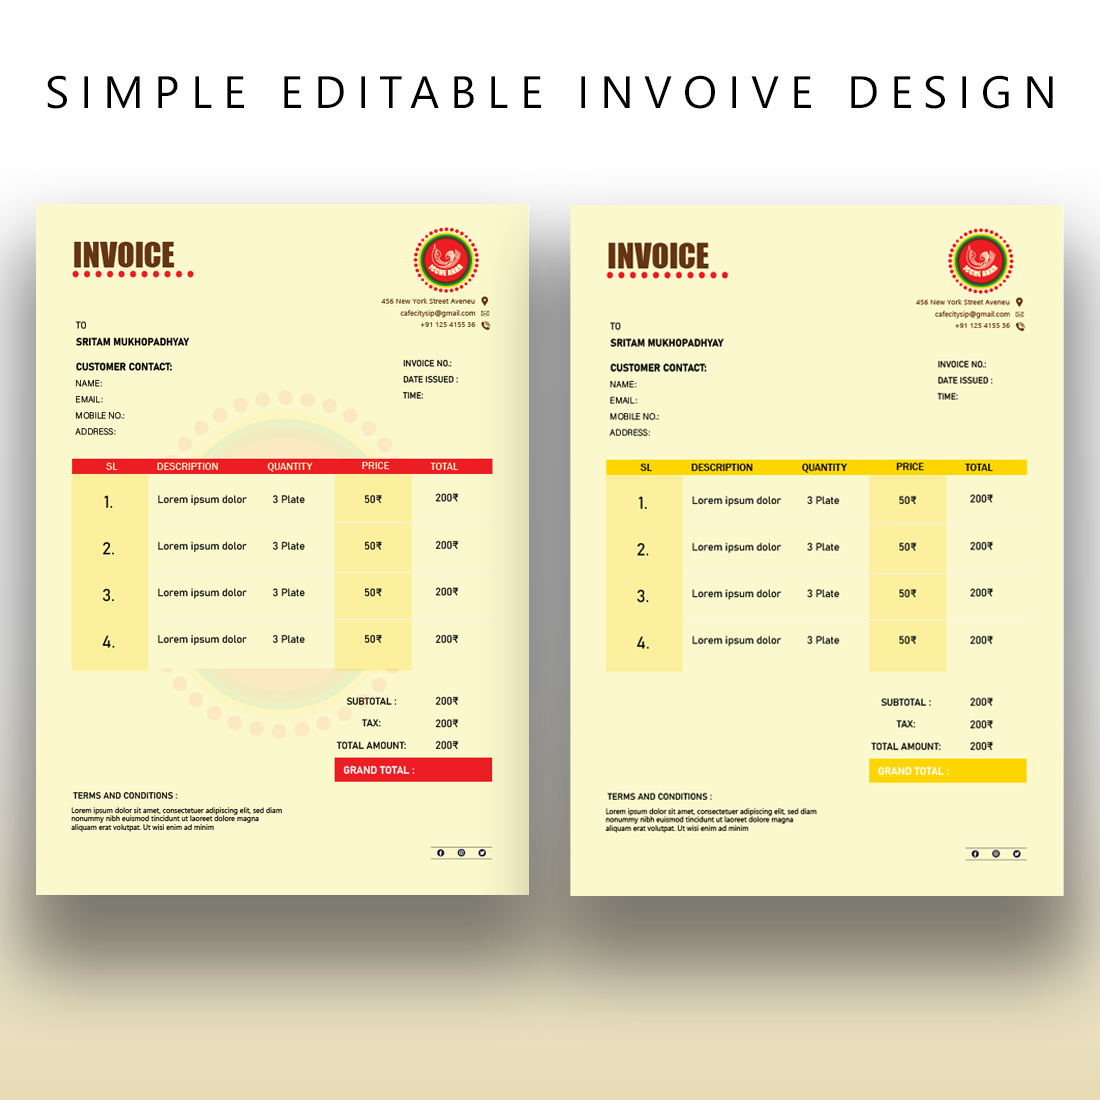 Unique Editable Invoice Design Template for Restraurent cover image.